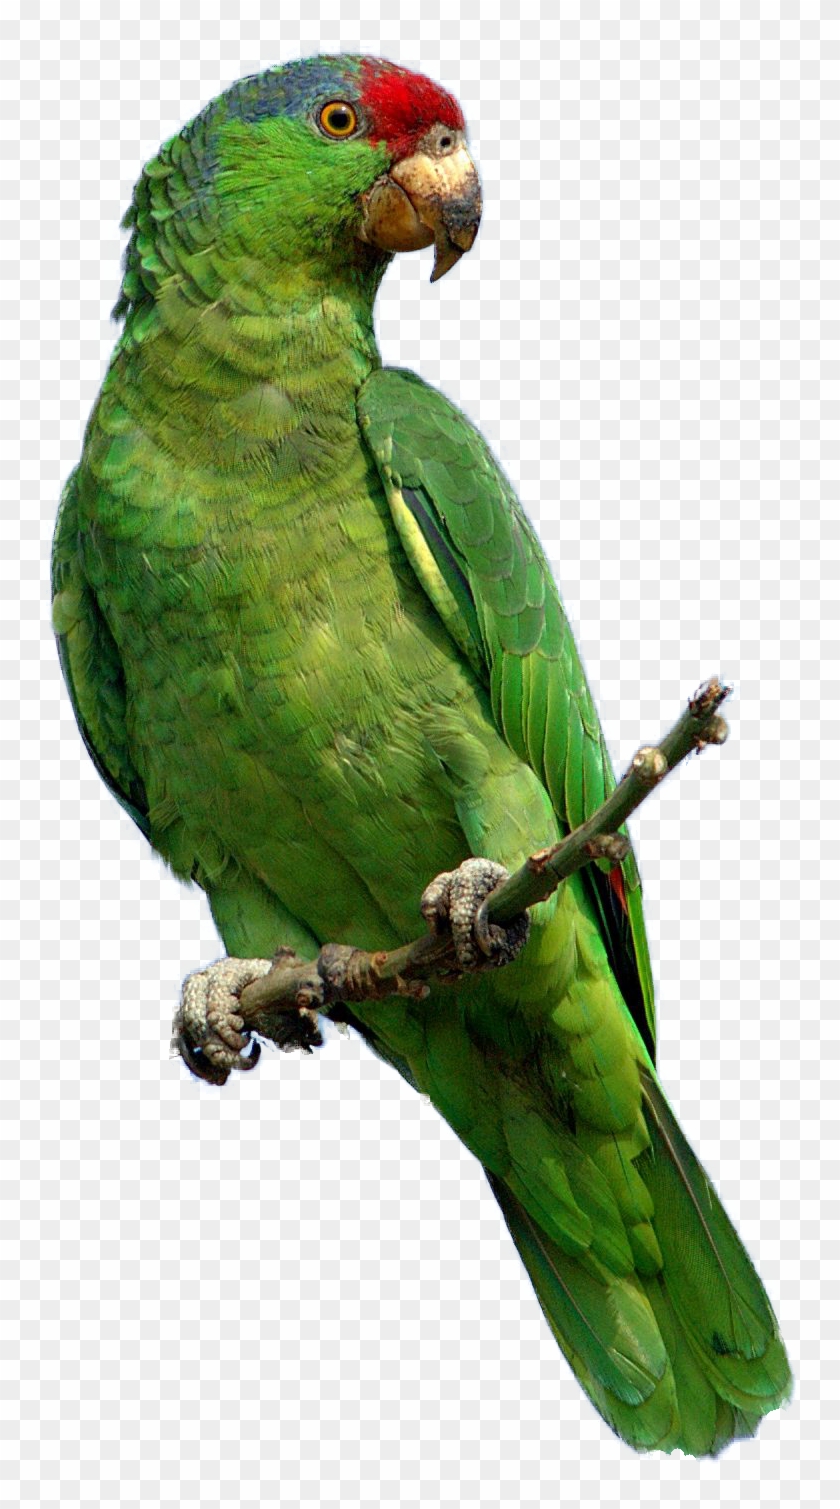 Green Parrot - Parrot Png #579540